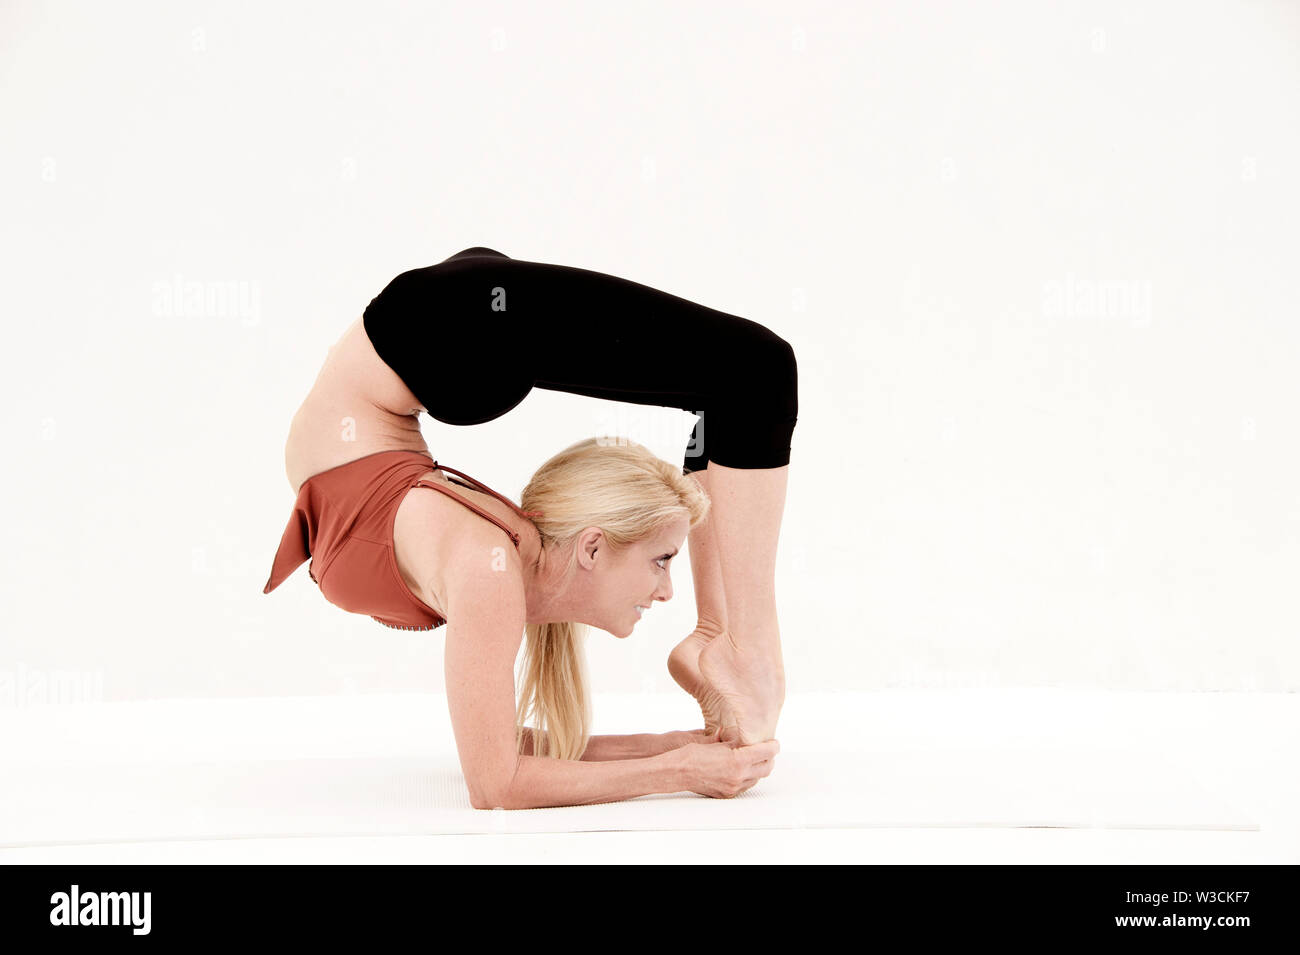 https://c8.alamy.com/comp/W3CKF7/advanced-yoga-practitioner-woman-in-extreme-yoga-pose-W3CKF7.jpg